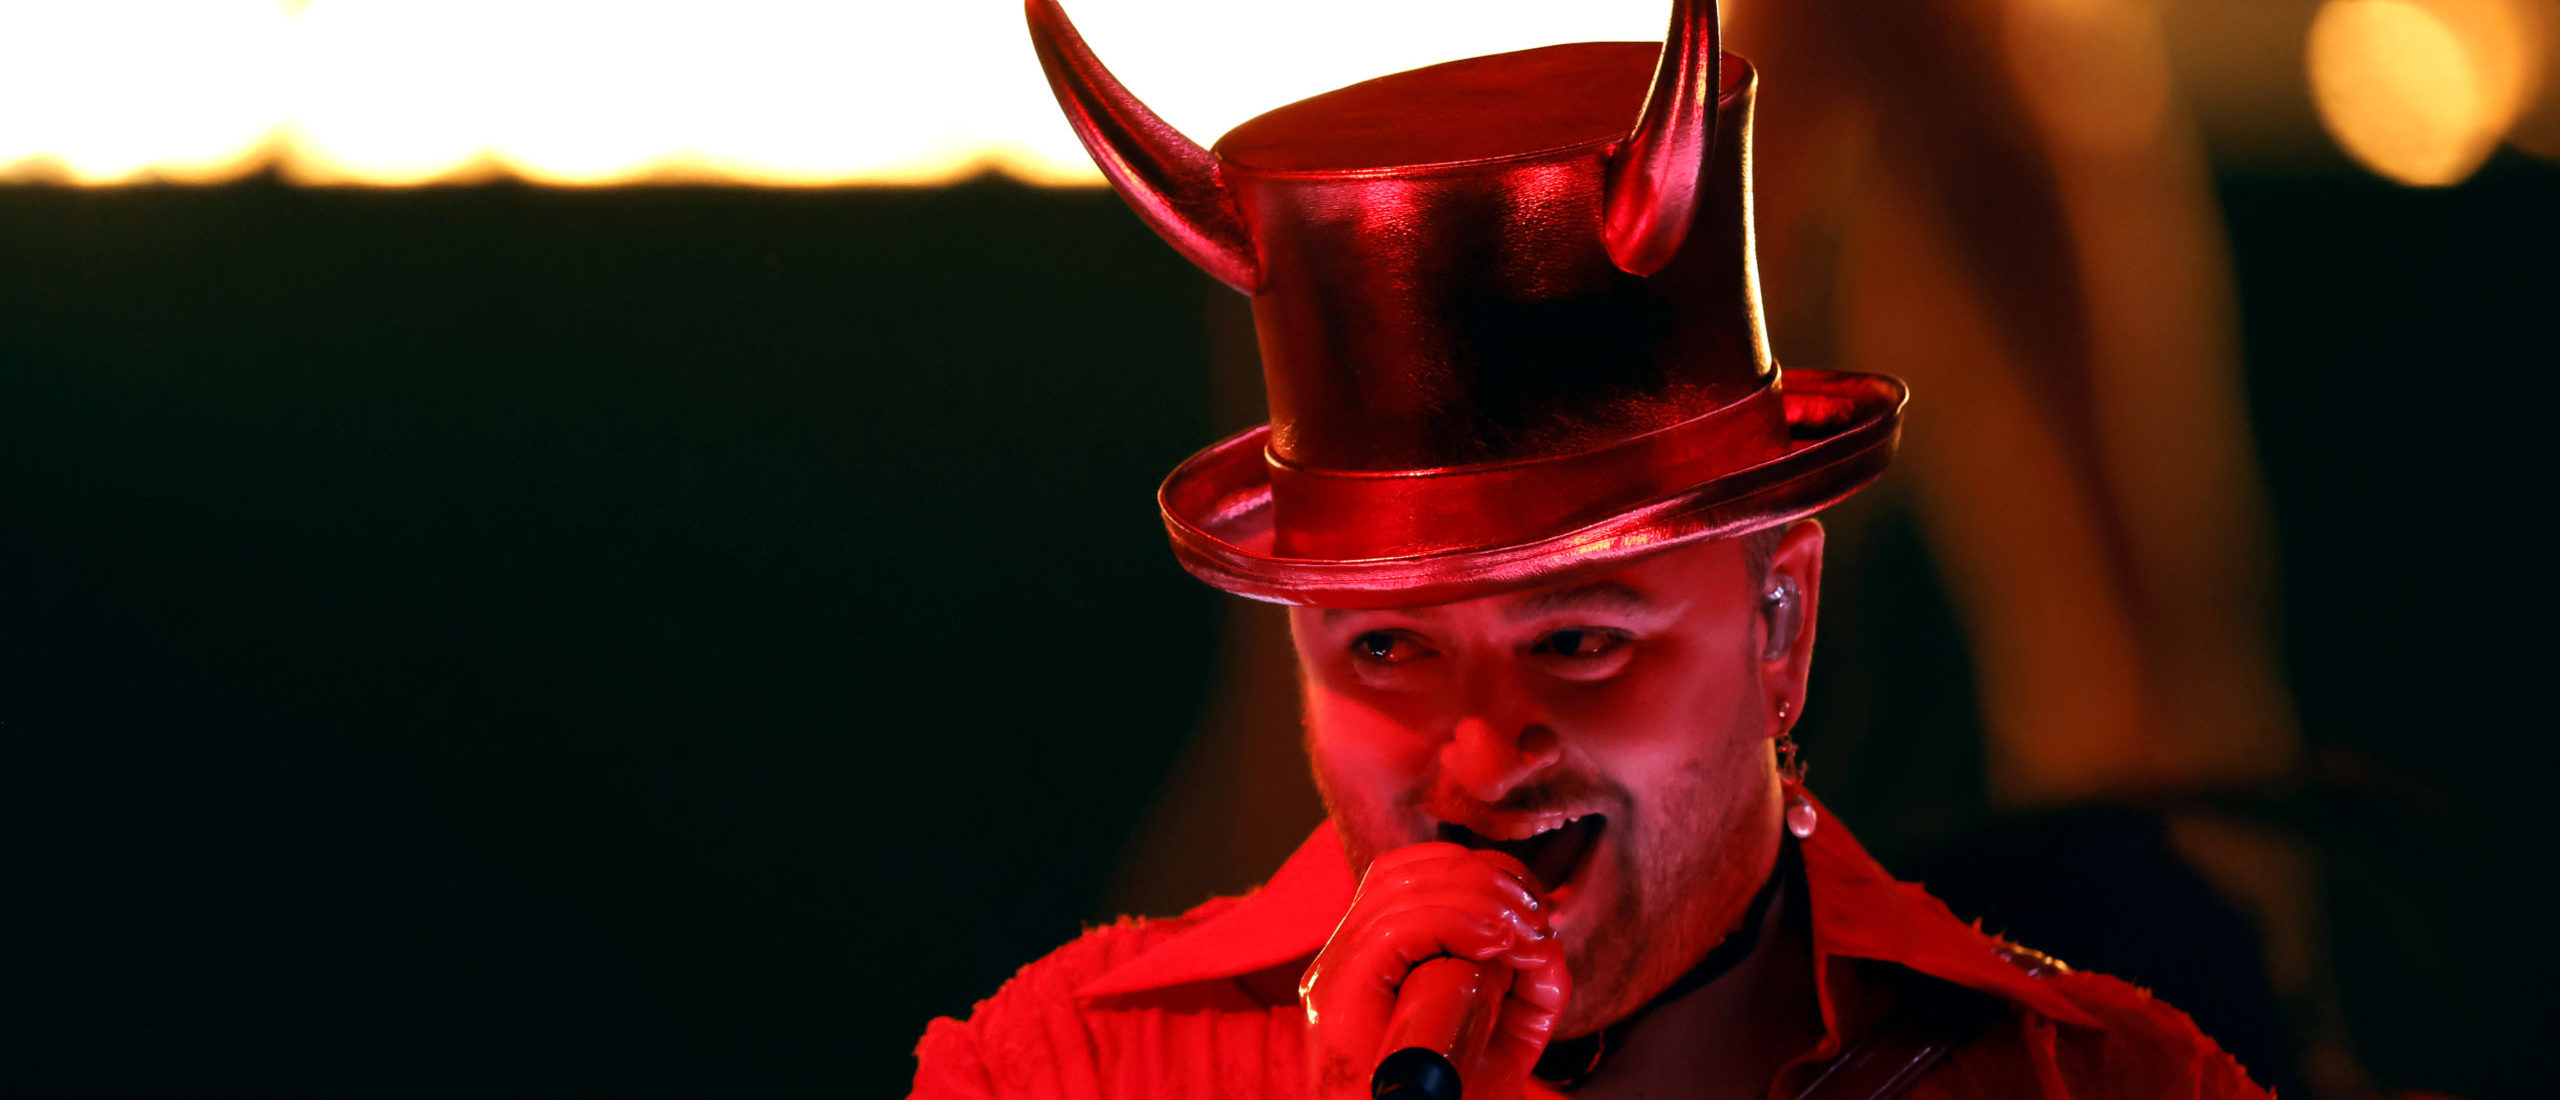 Ted Cruz Denounces ‘Evil’ SatanicThemed Performance At Grammys The